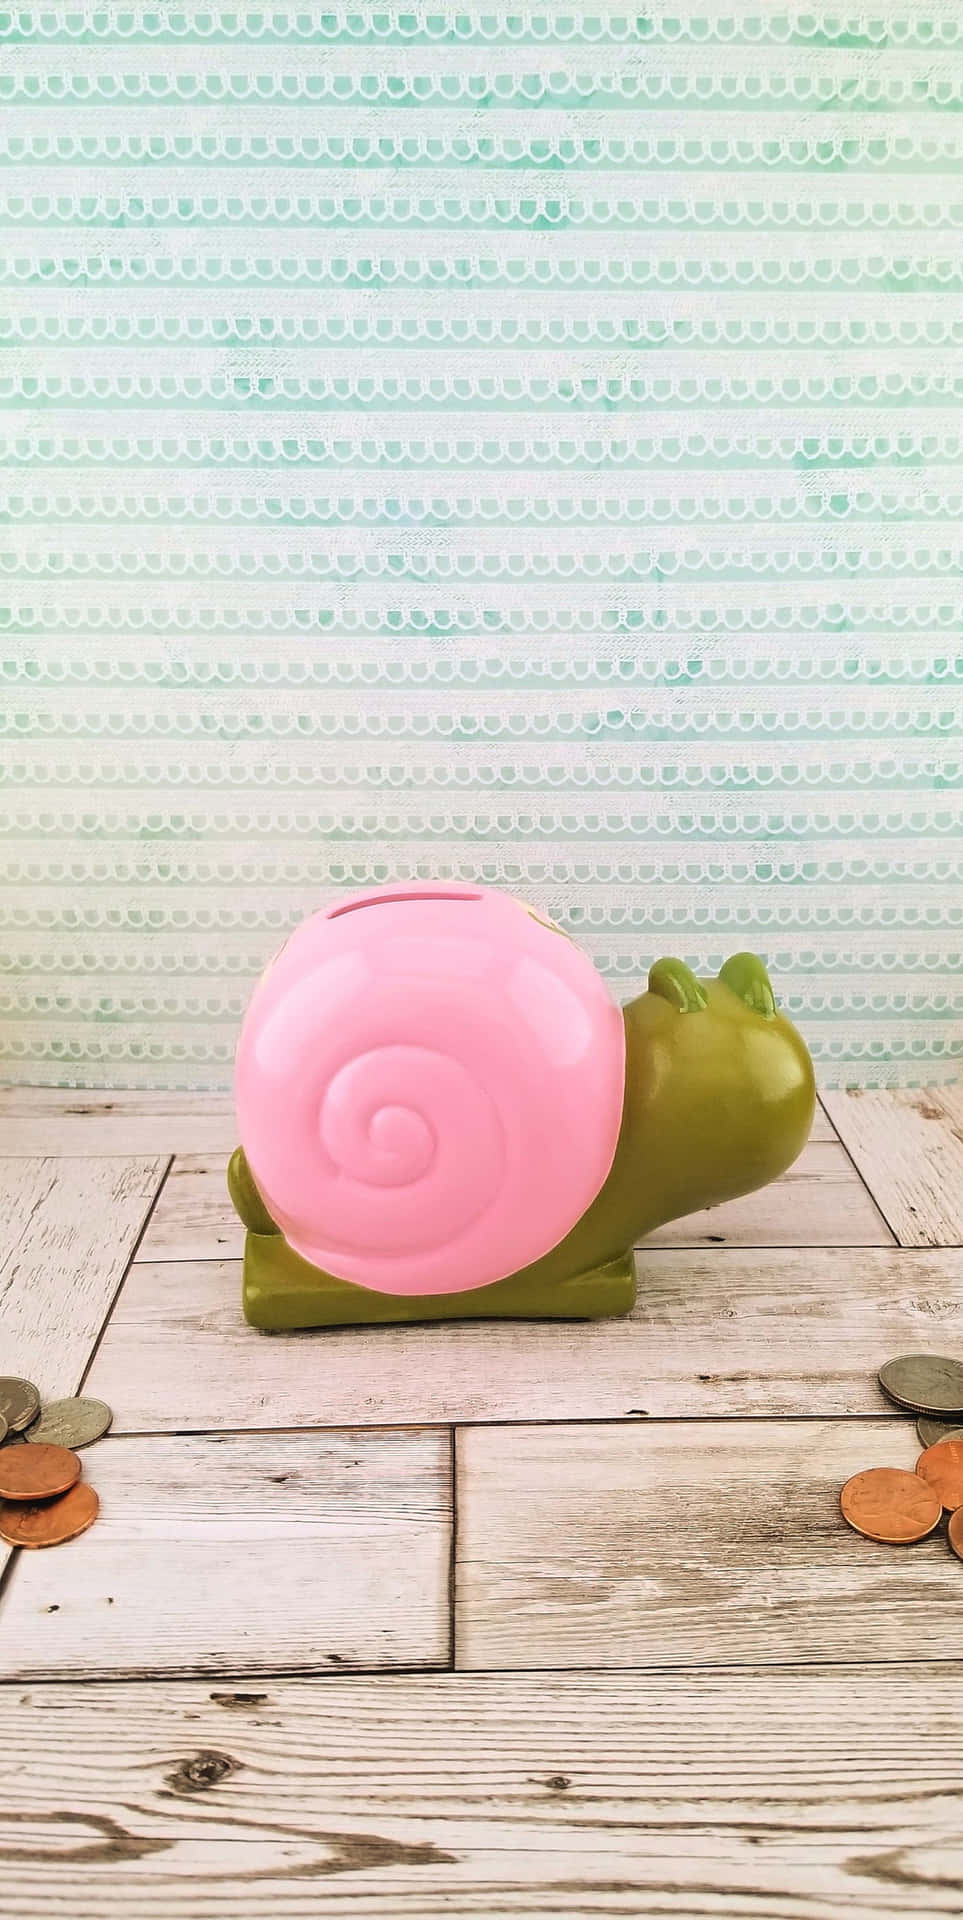 A vibrant pink snail amidst lush greenery Wallpaper